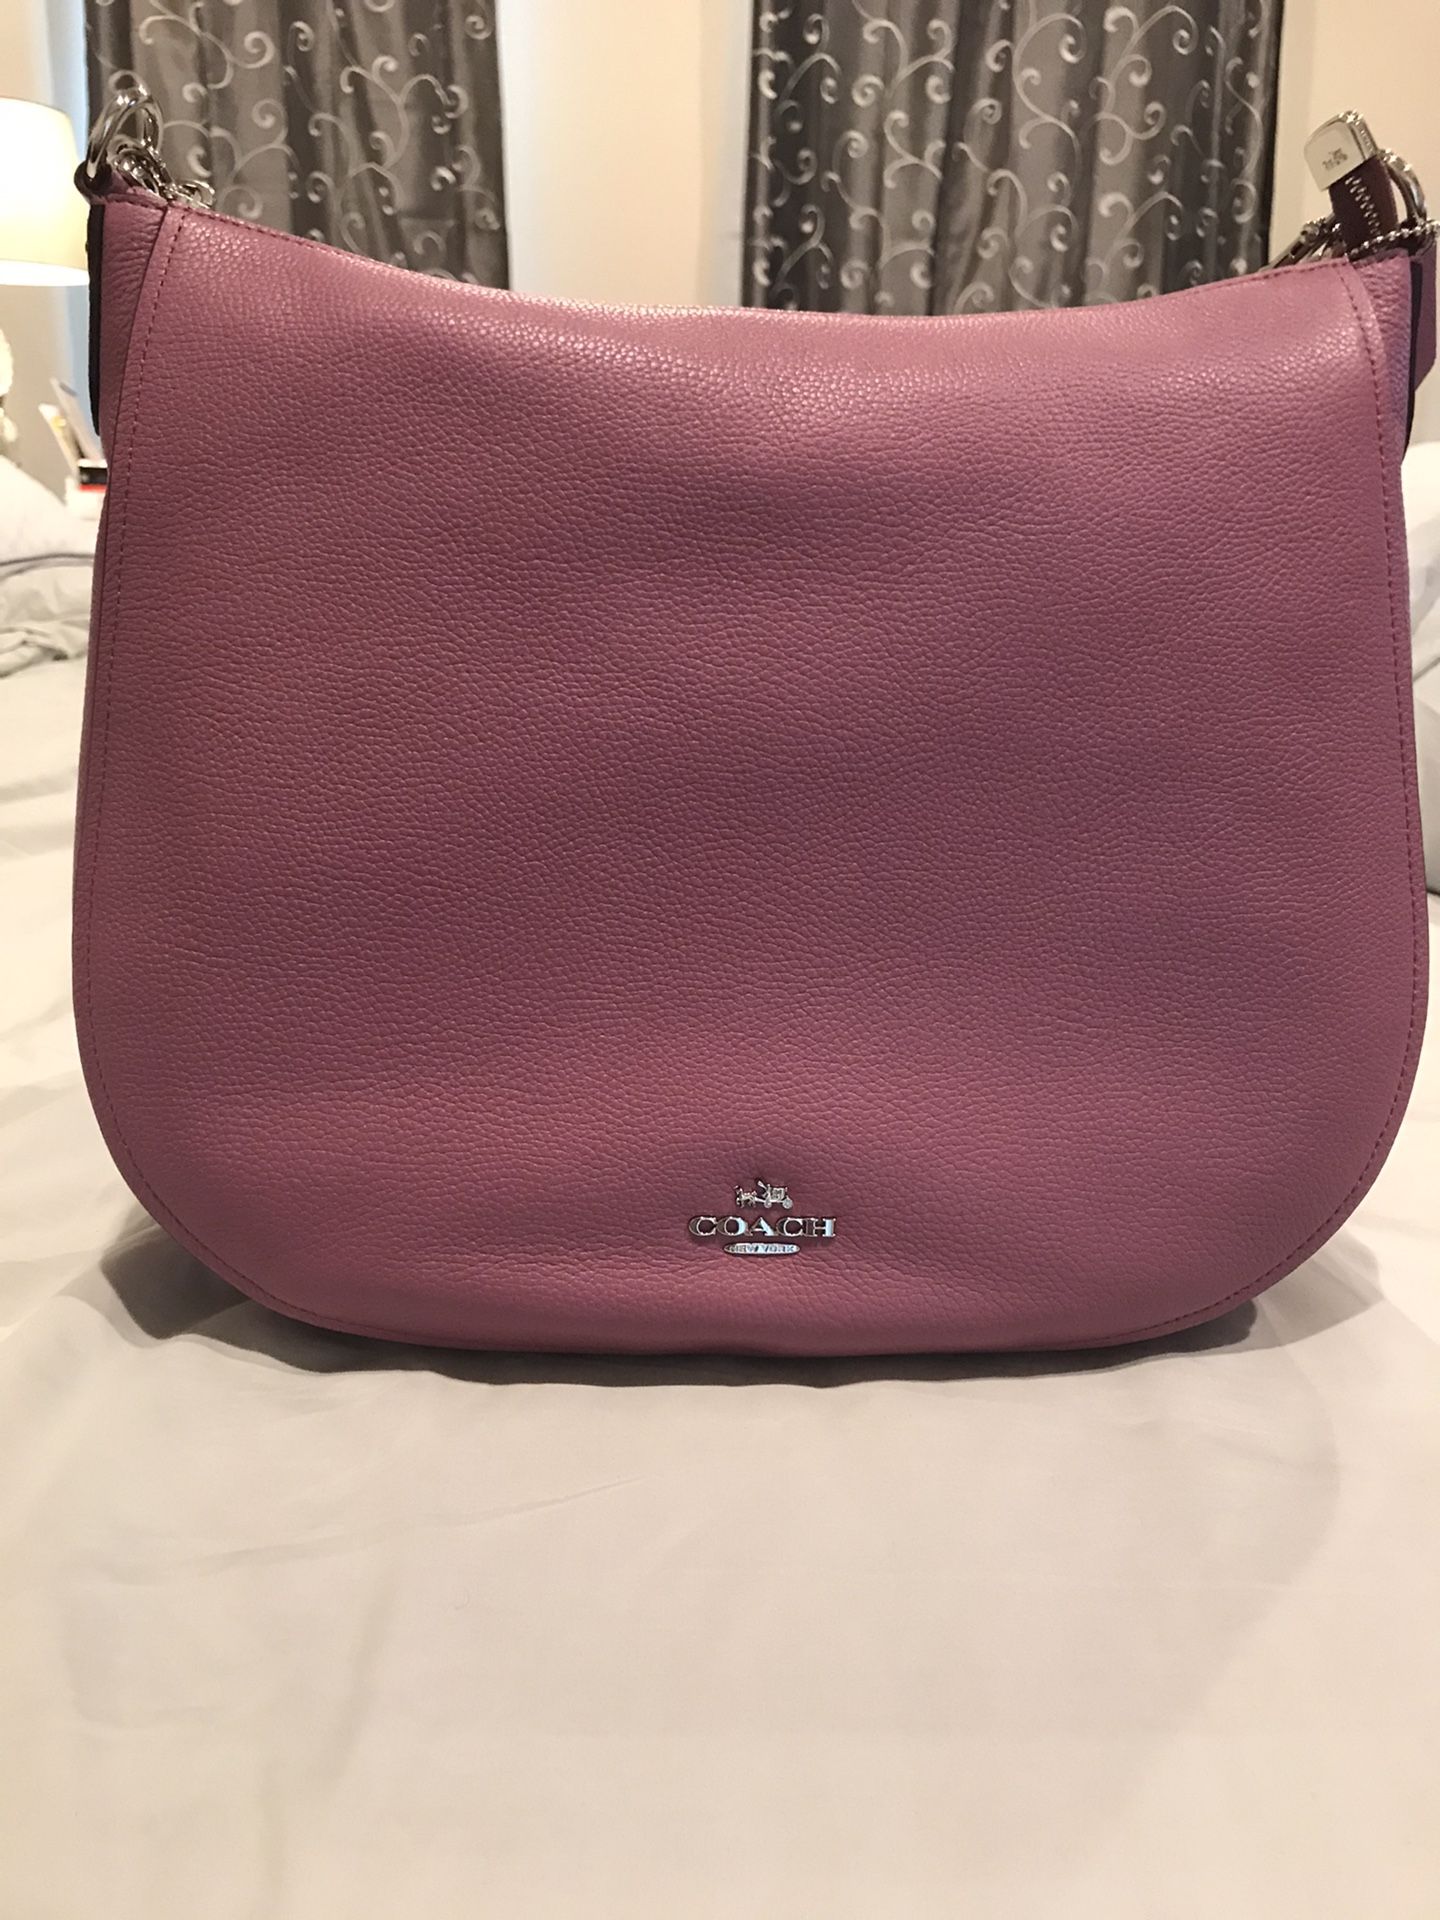 Coach purse in dark pink